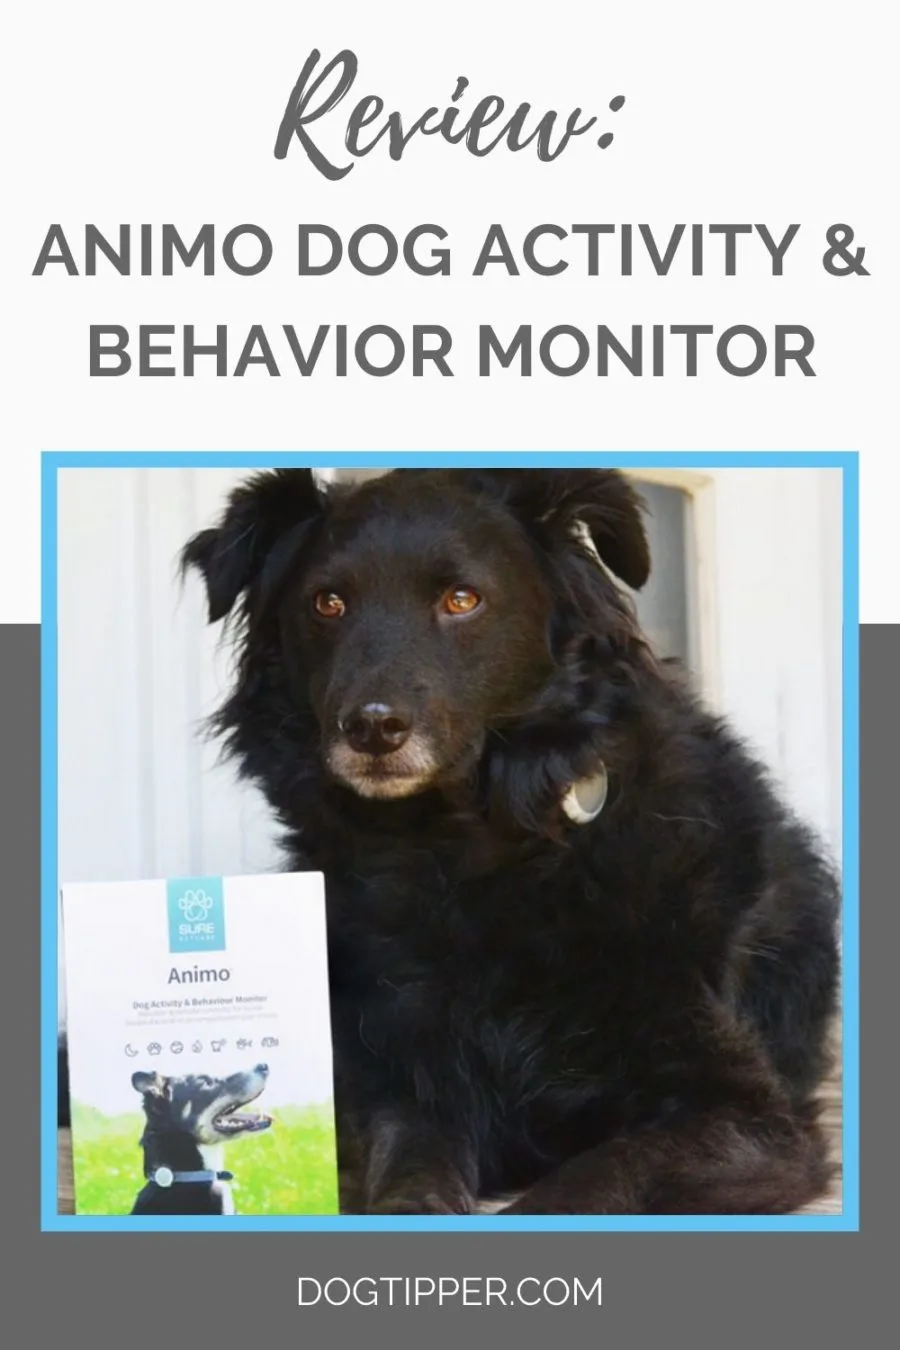 Animo Dog Activity and Behavior Monitor